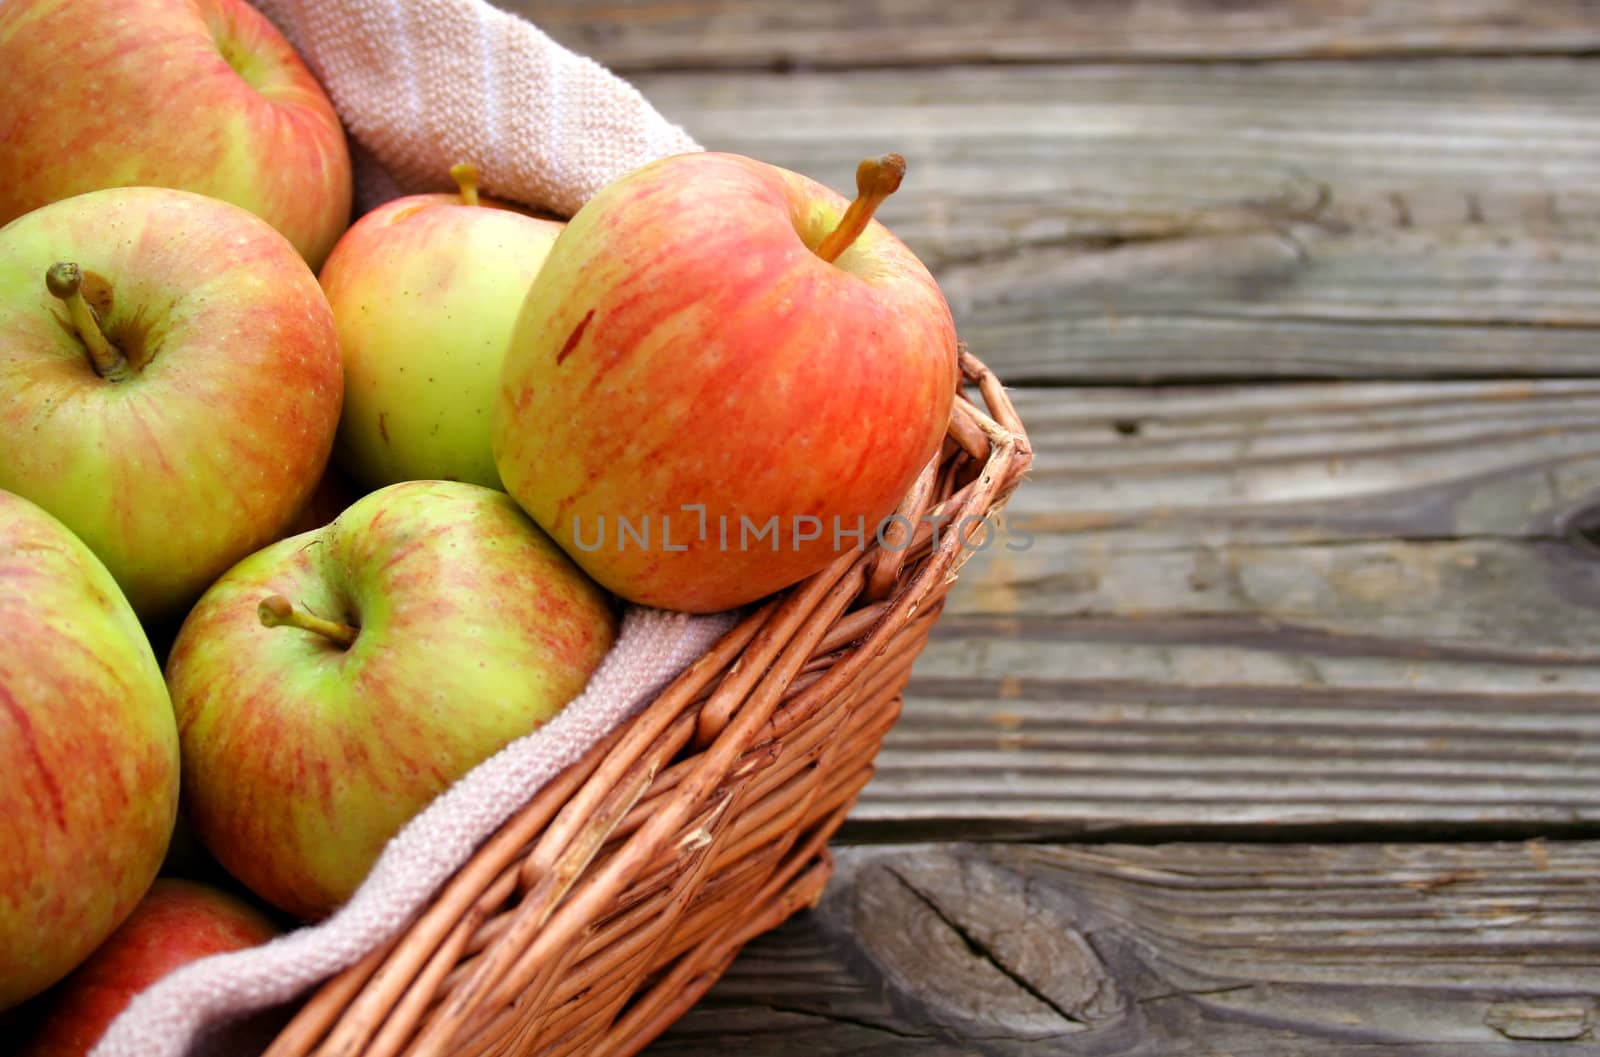 Apples by thephotoguy